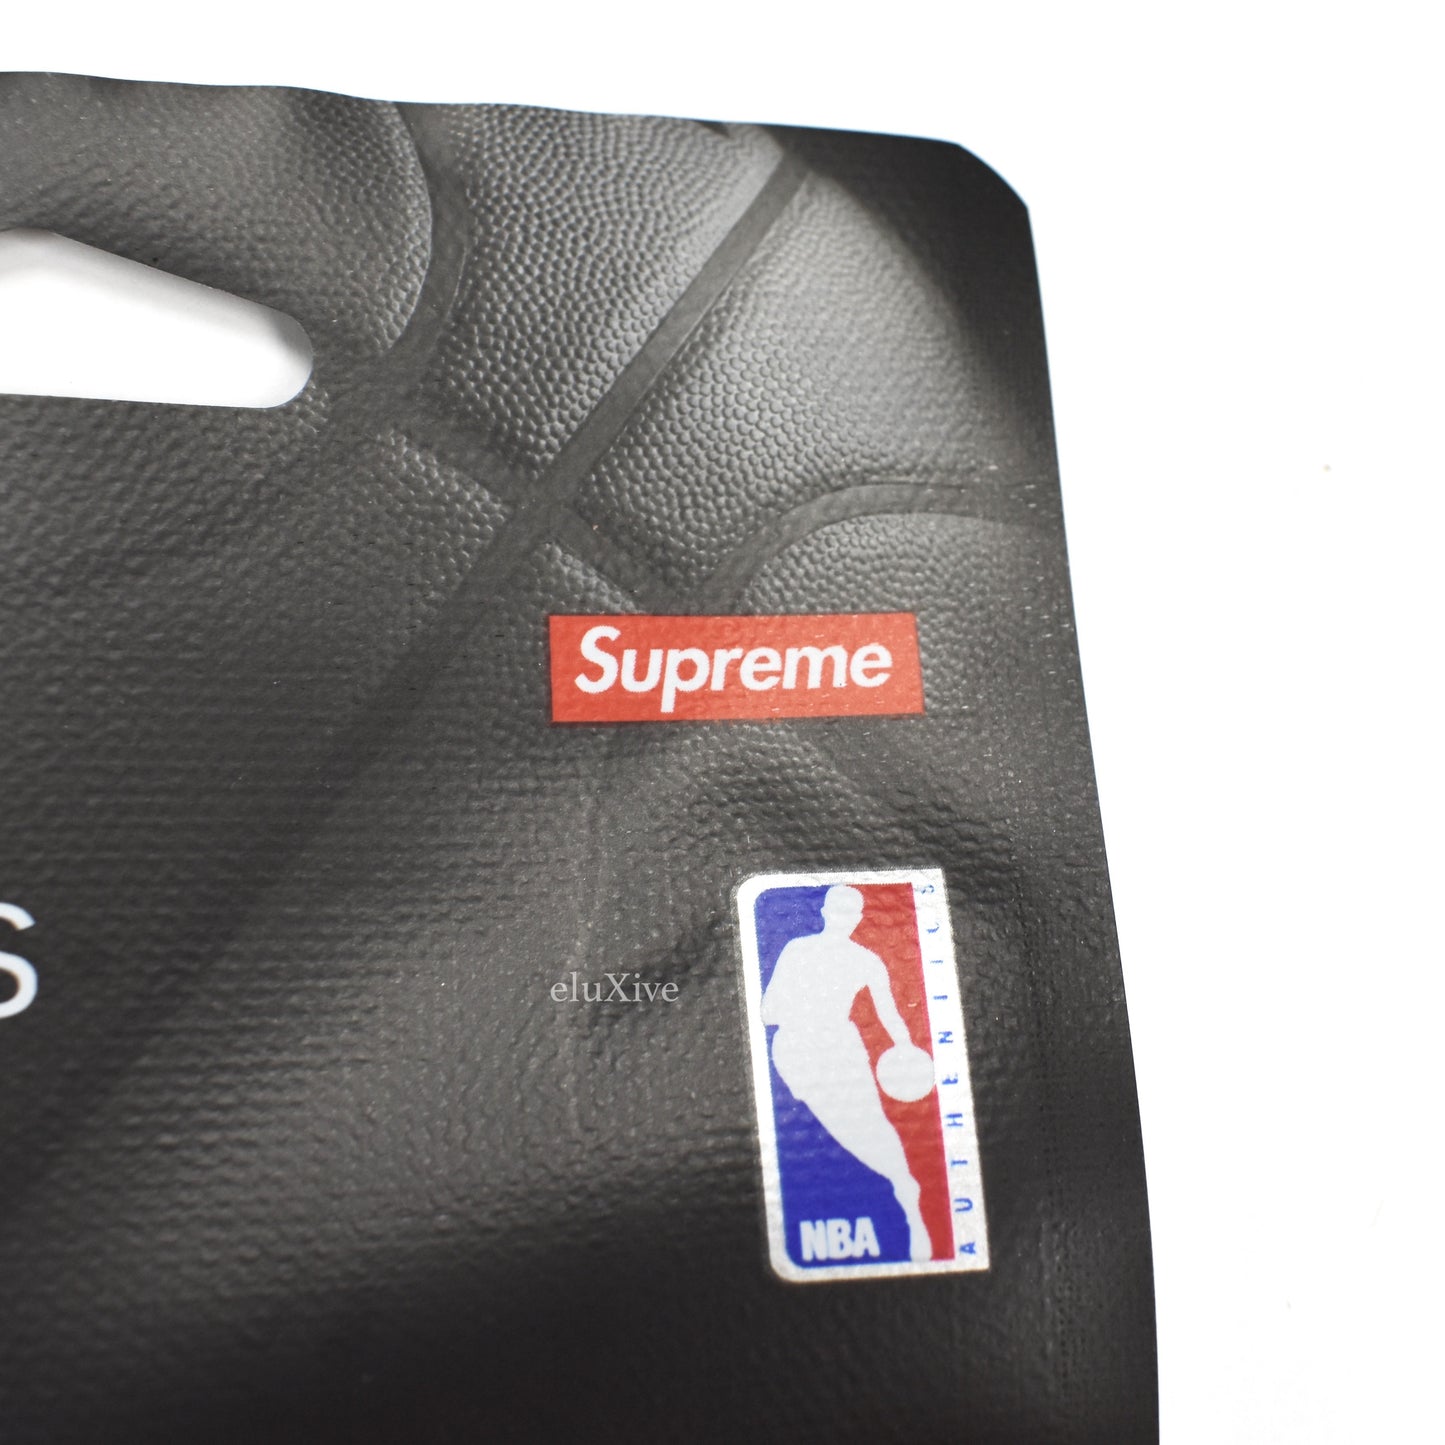 Supreme x Nike - NBA / Box Logo Wristbands (Red)